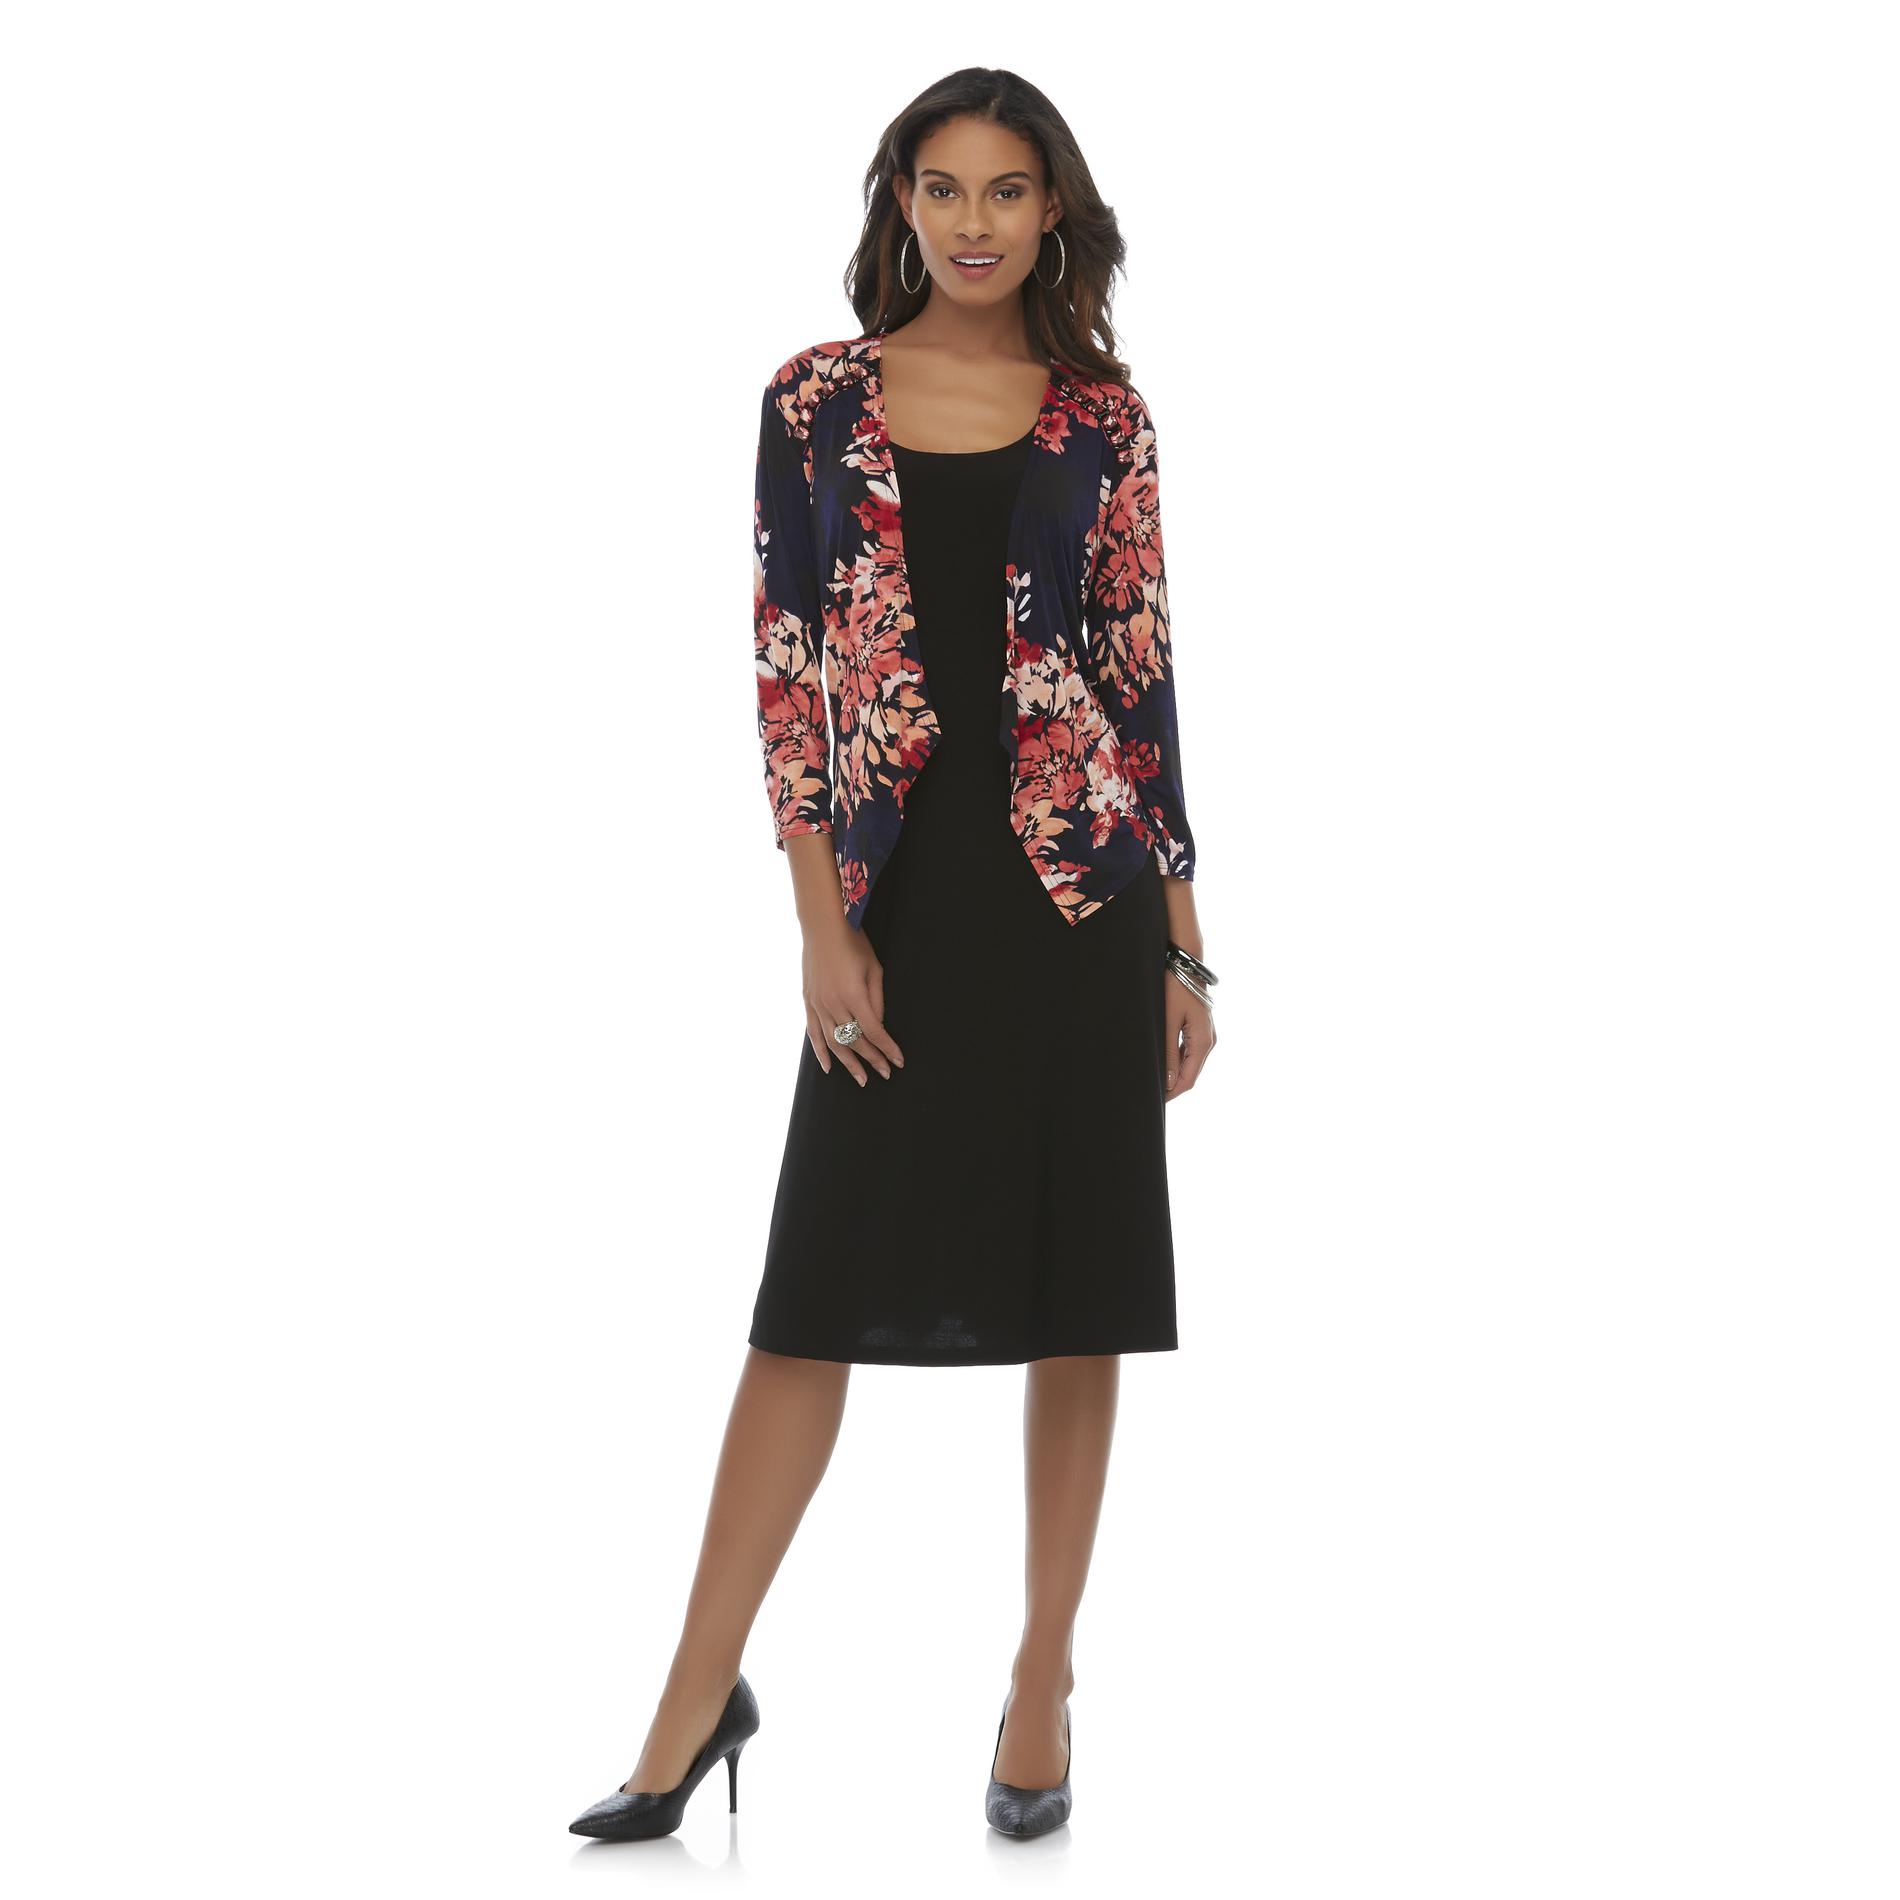 Covington Women's Sleeveless Dress & Beaded Jacket - Floral